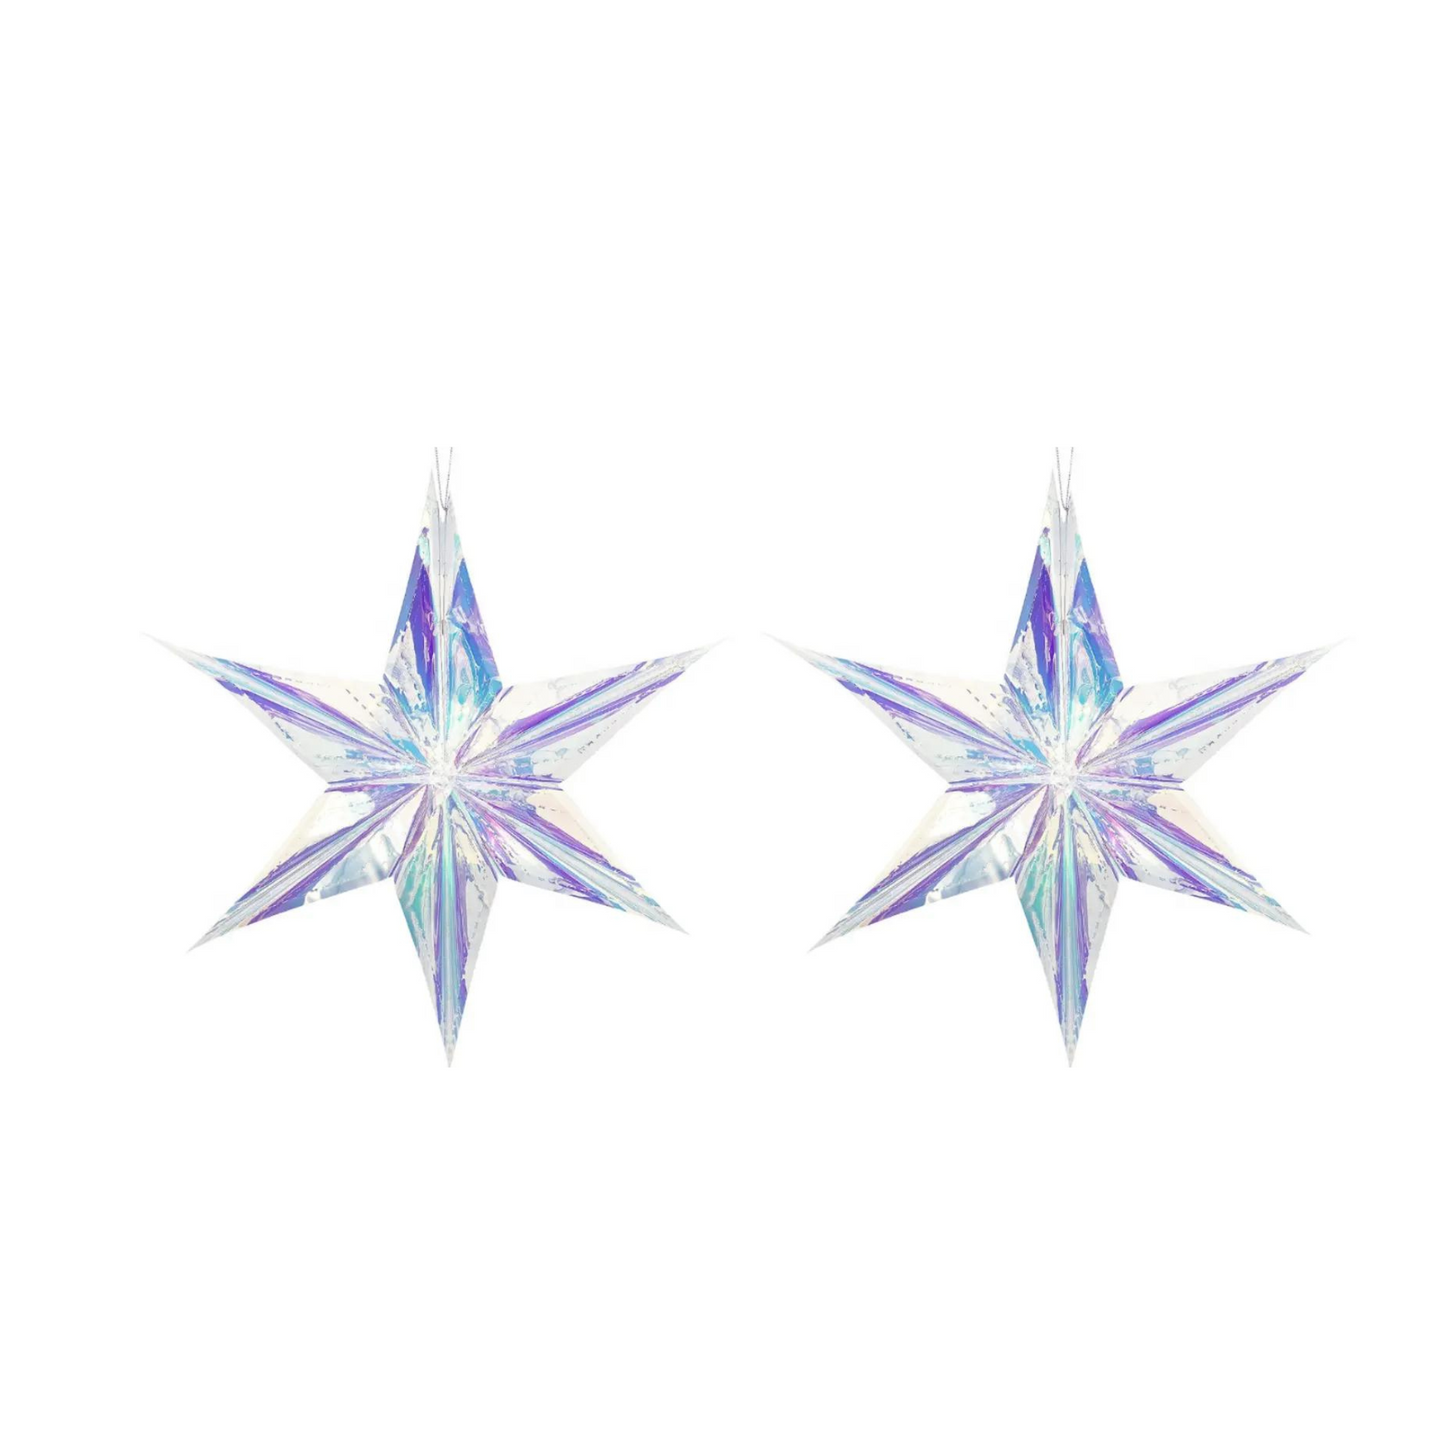 Iridescent Star Decoration Hanging Interchanging Colour Star Frozen Props Decor Star Lantern Christmas Ornament